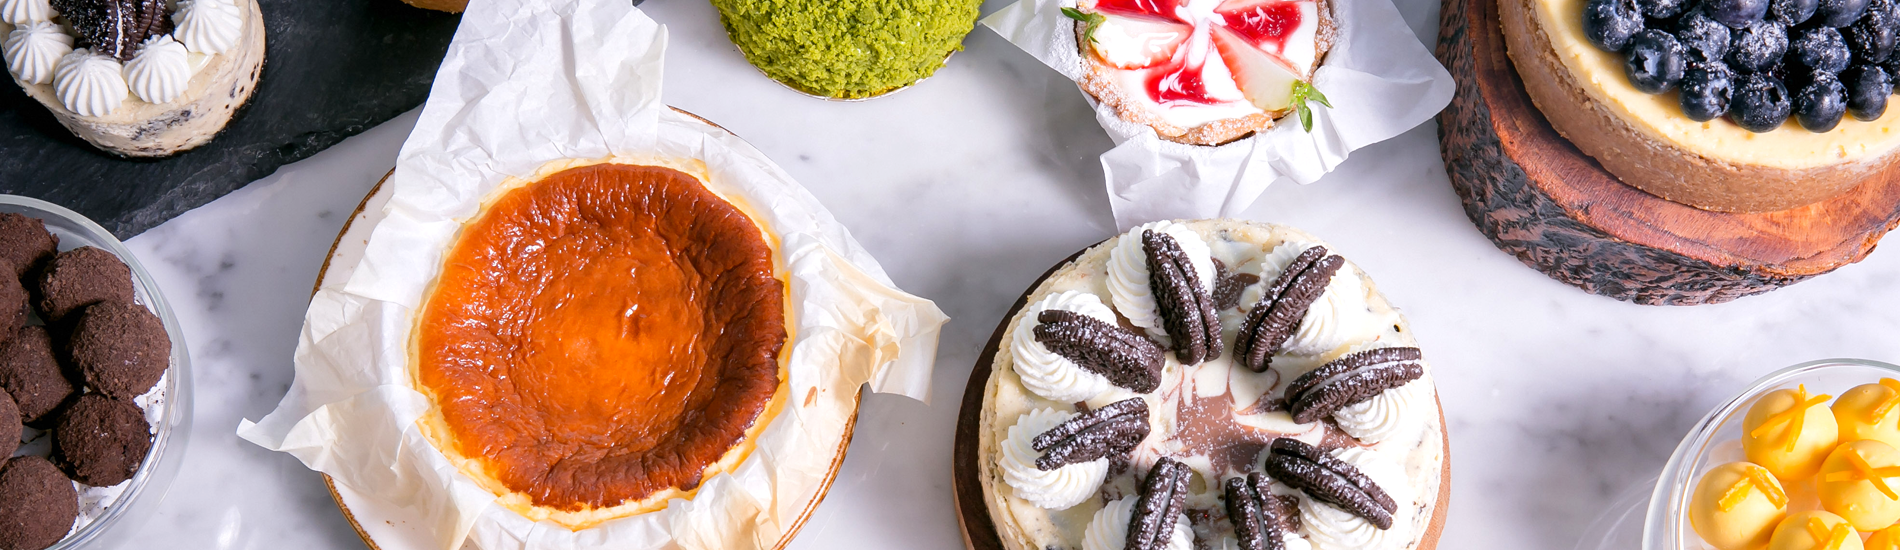 Try new cheesecakes from around the world at Centara Grand